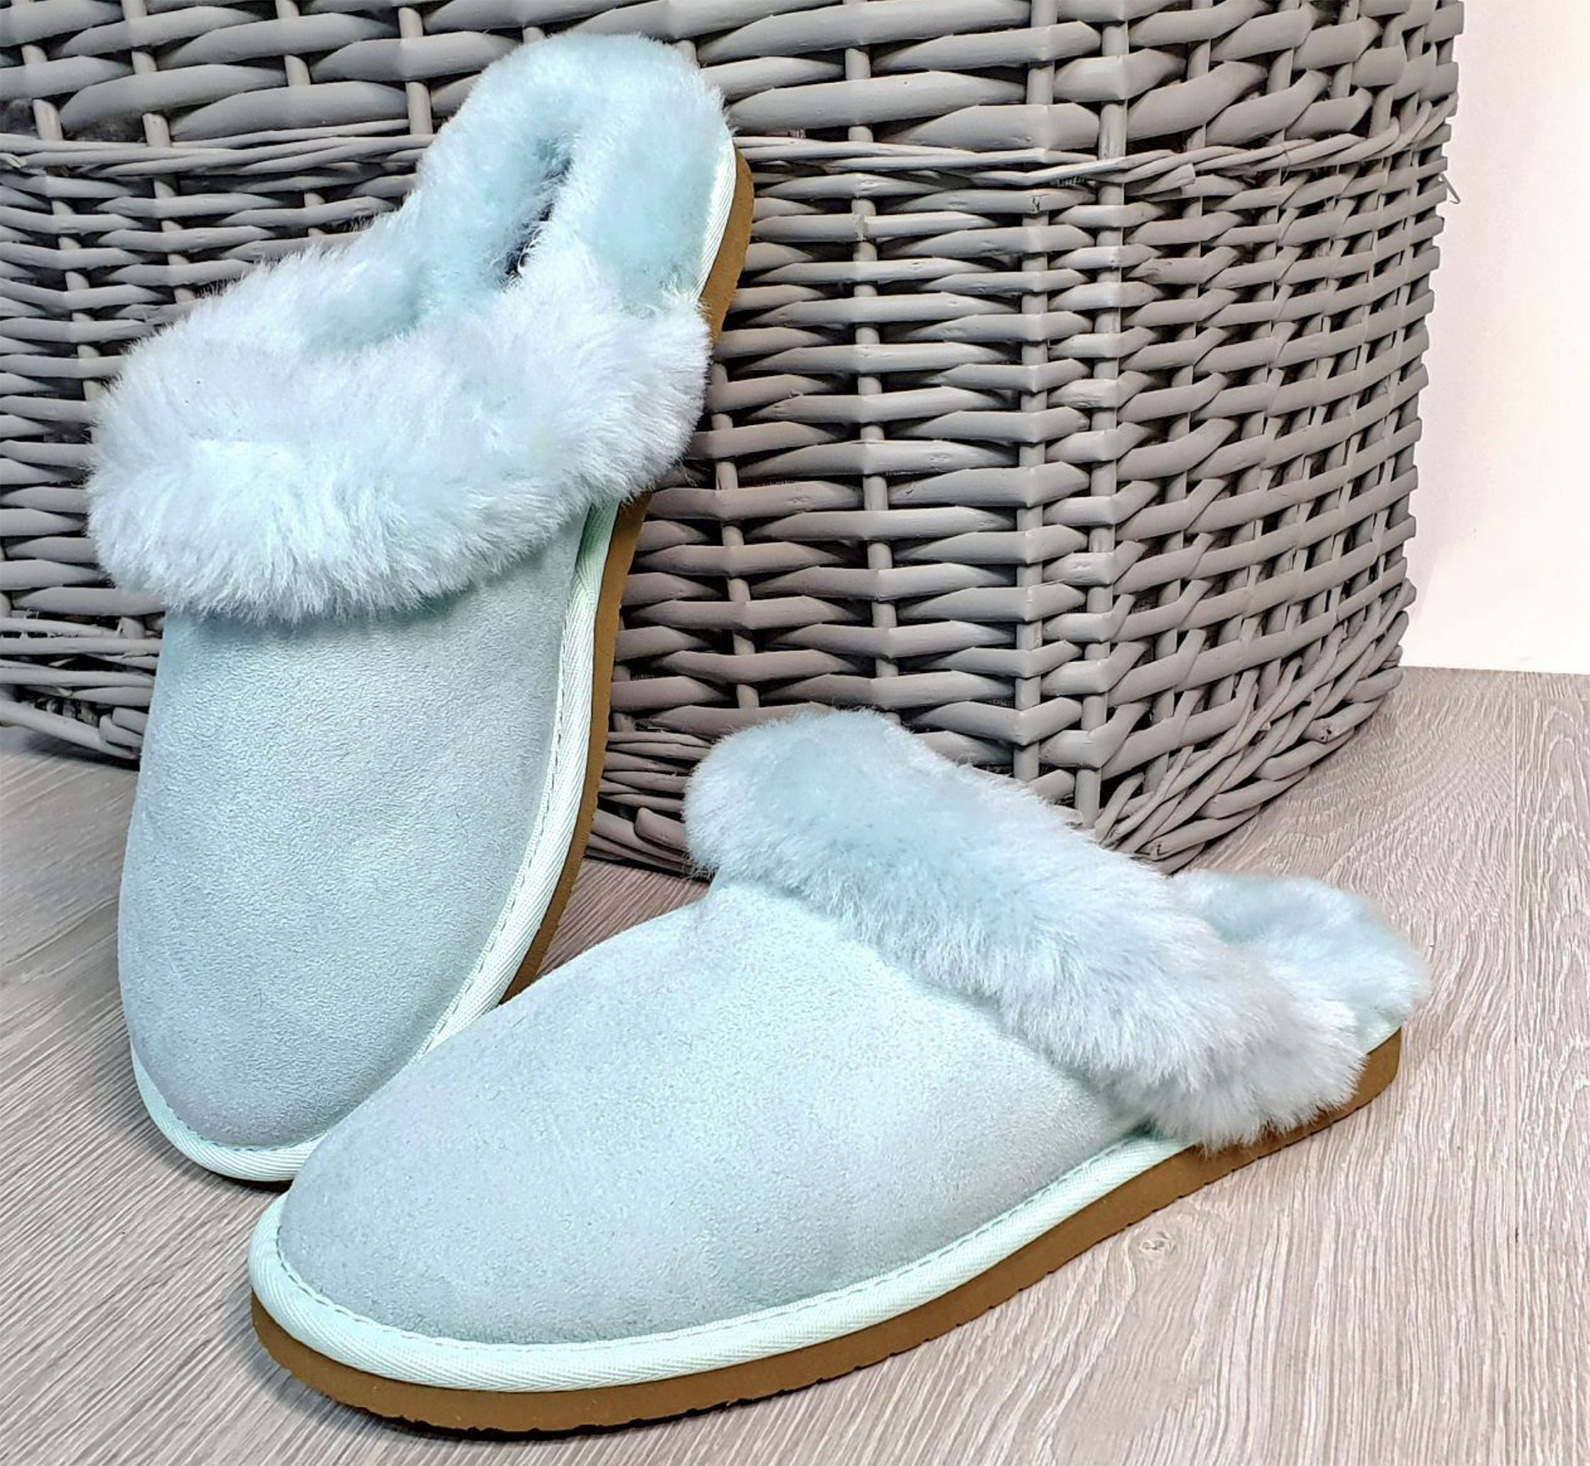 Jacobs & Dalton British sheepskin slippers, £33